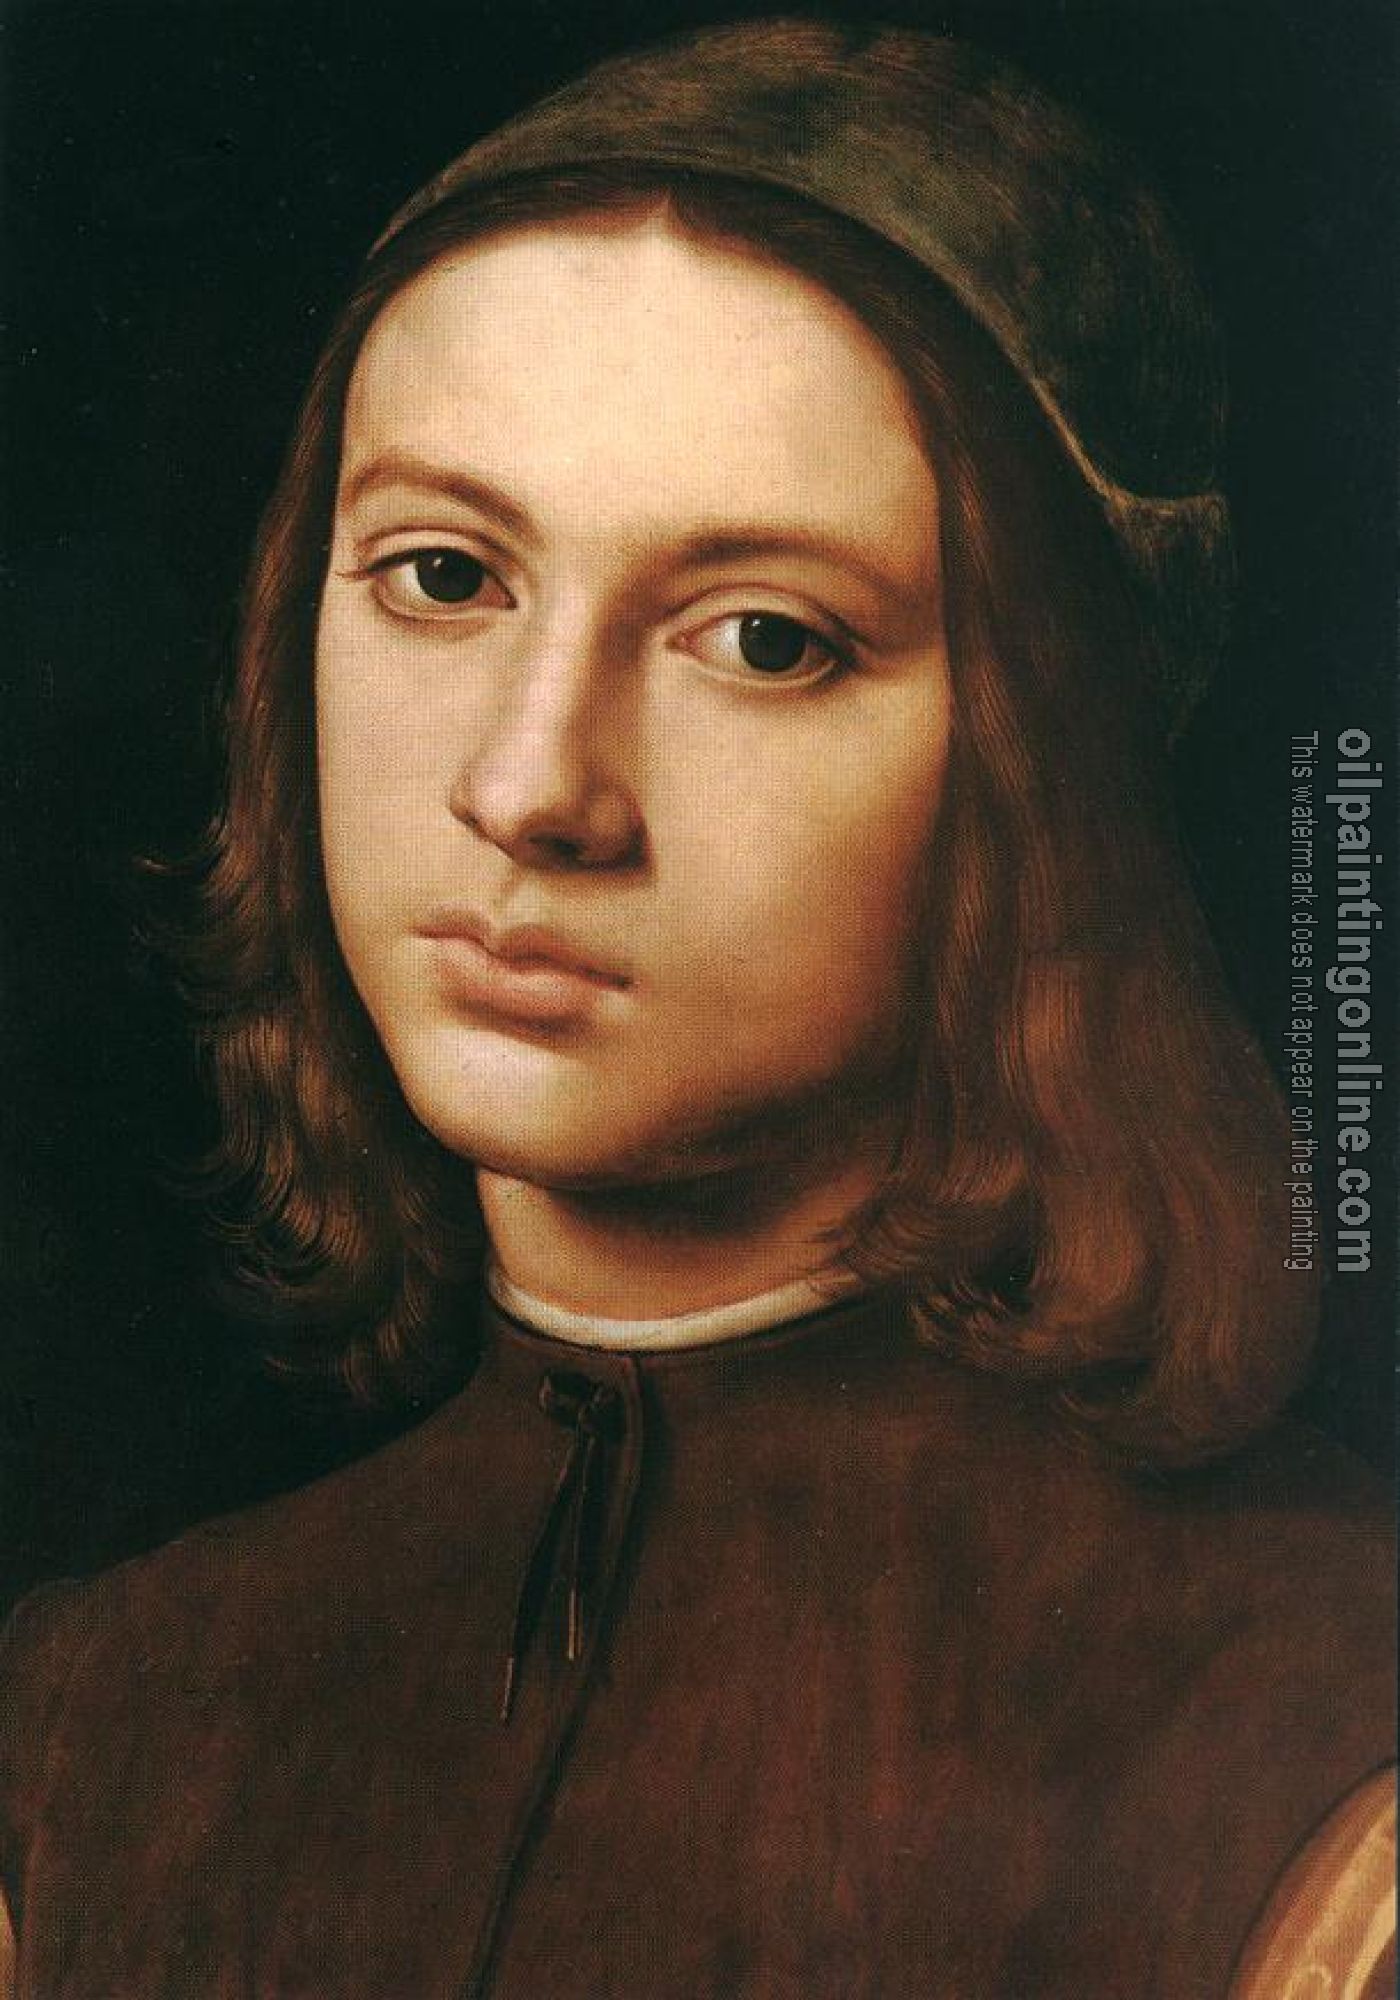 Perugino, Pietro - Portrait of a Young Man